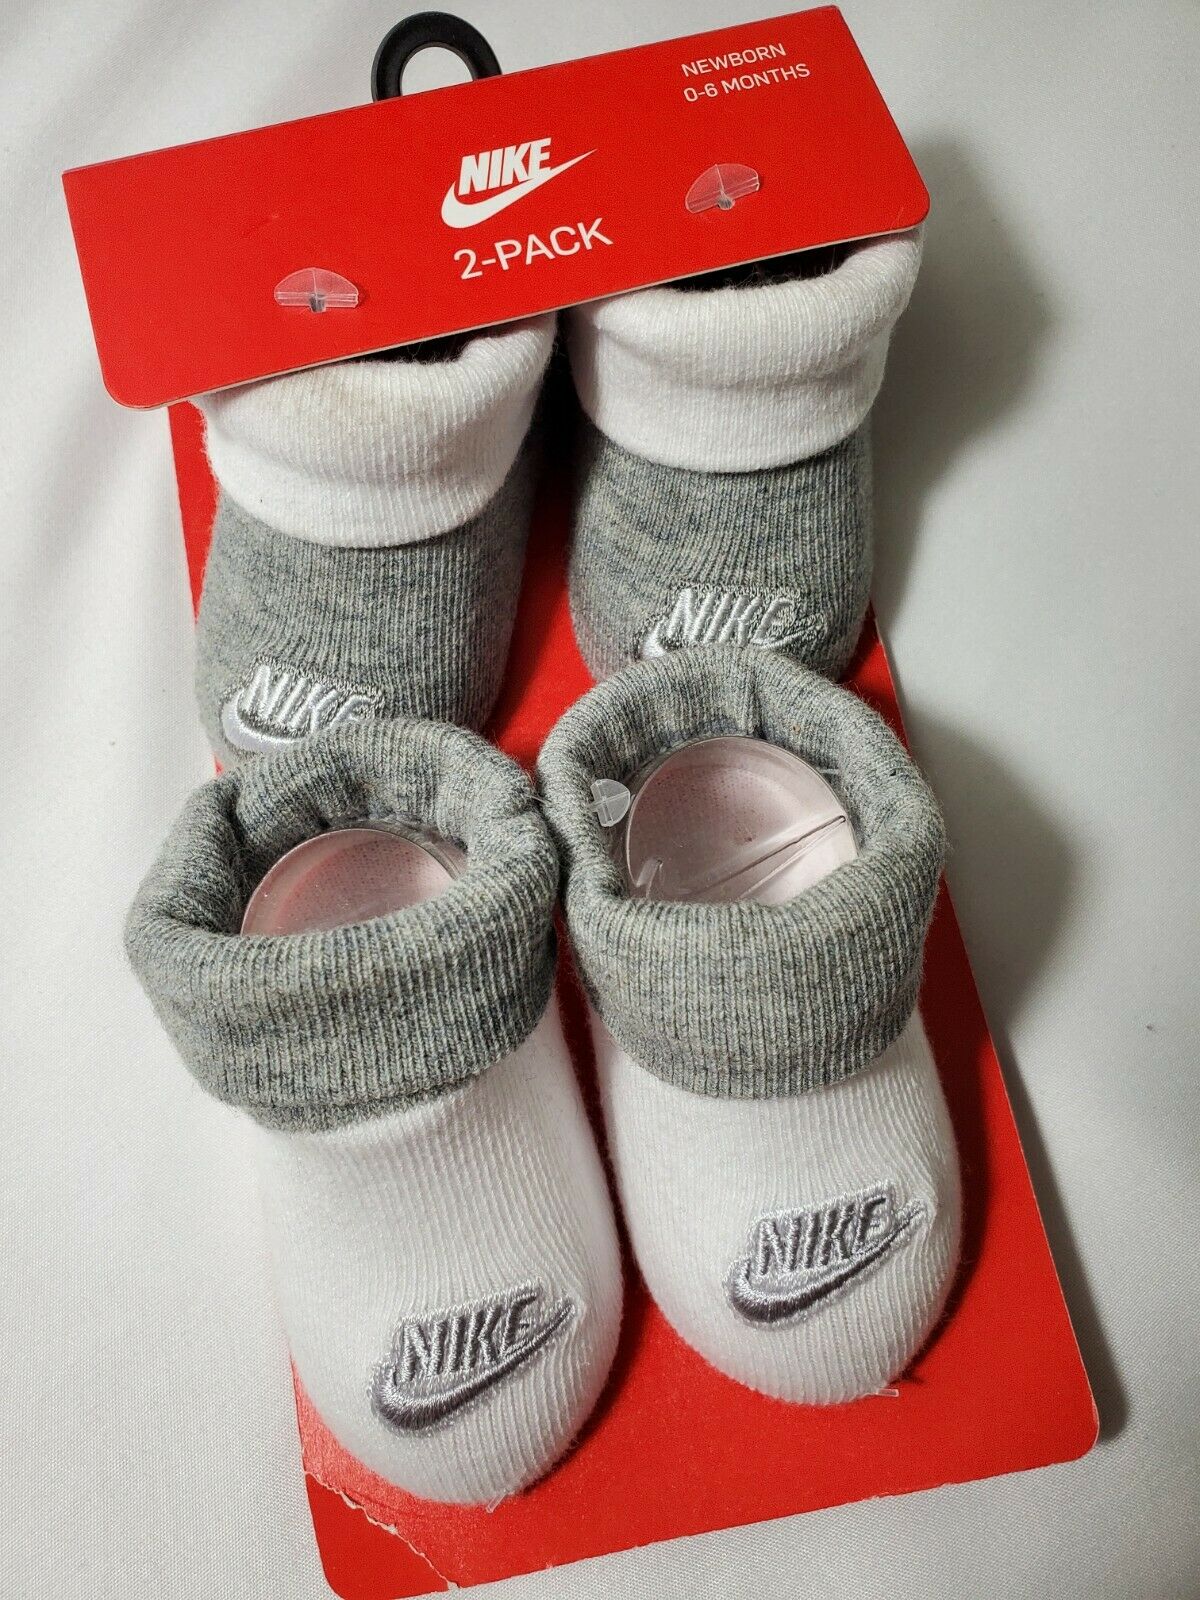 Nike Booties Crib Shoes Socks Baby Newborn 2 Pack 0-6 Month White/Gray